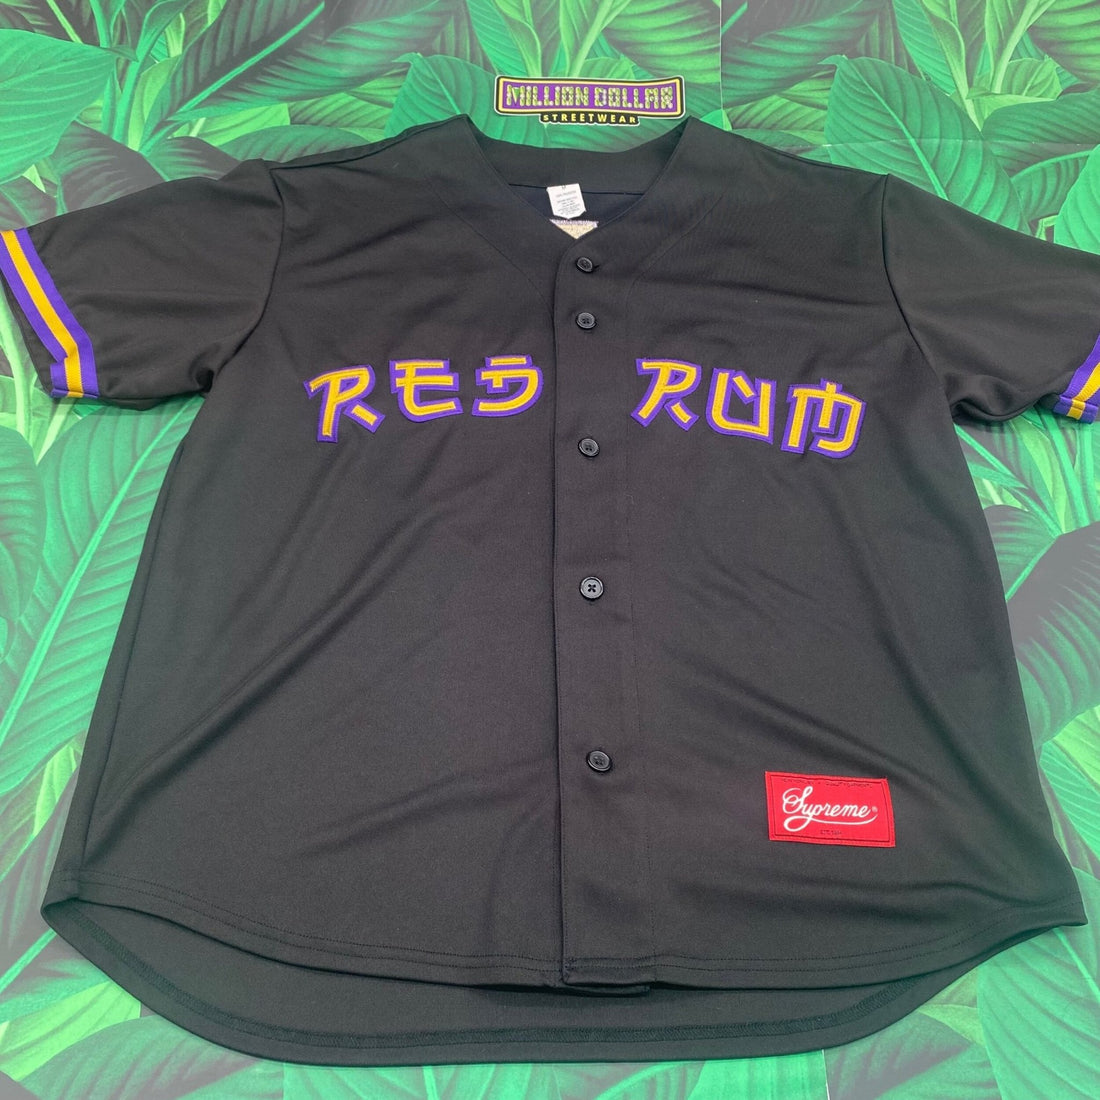 Supreme Red Rum Baseball Shirt - Farfetch